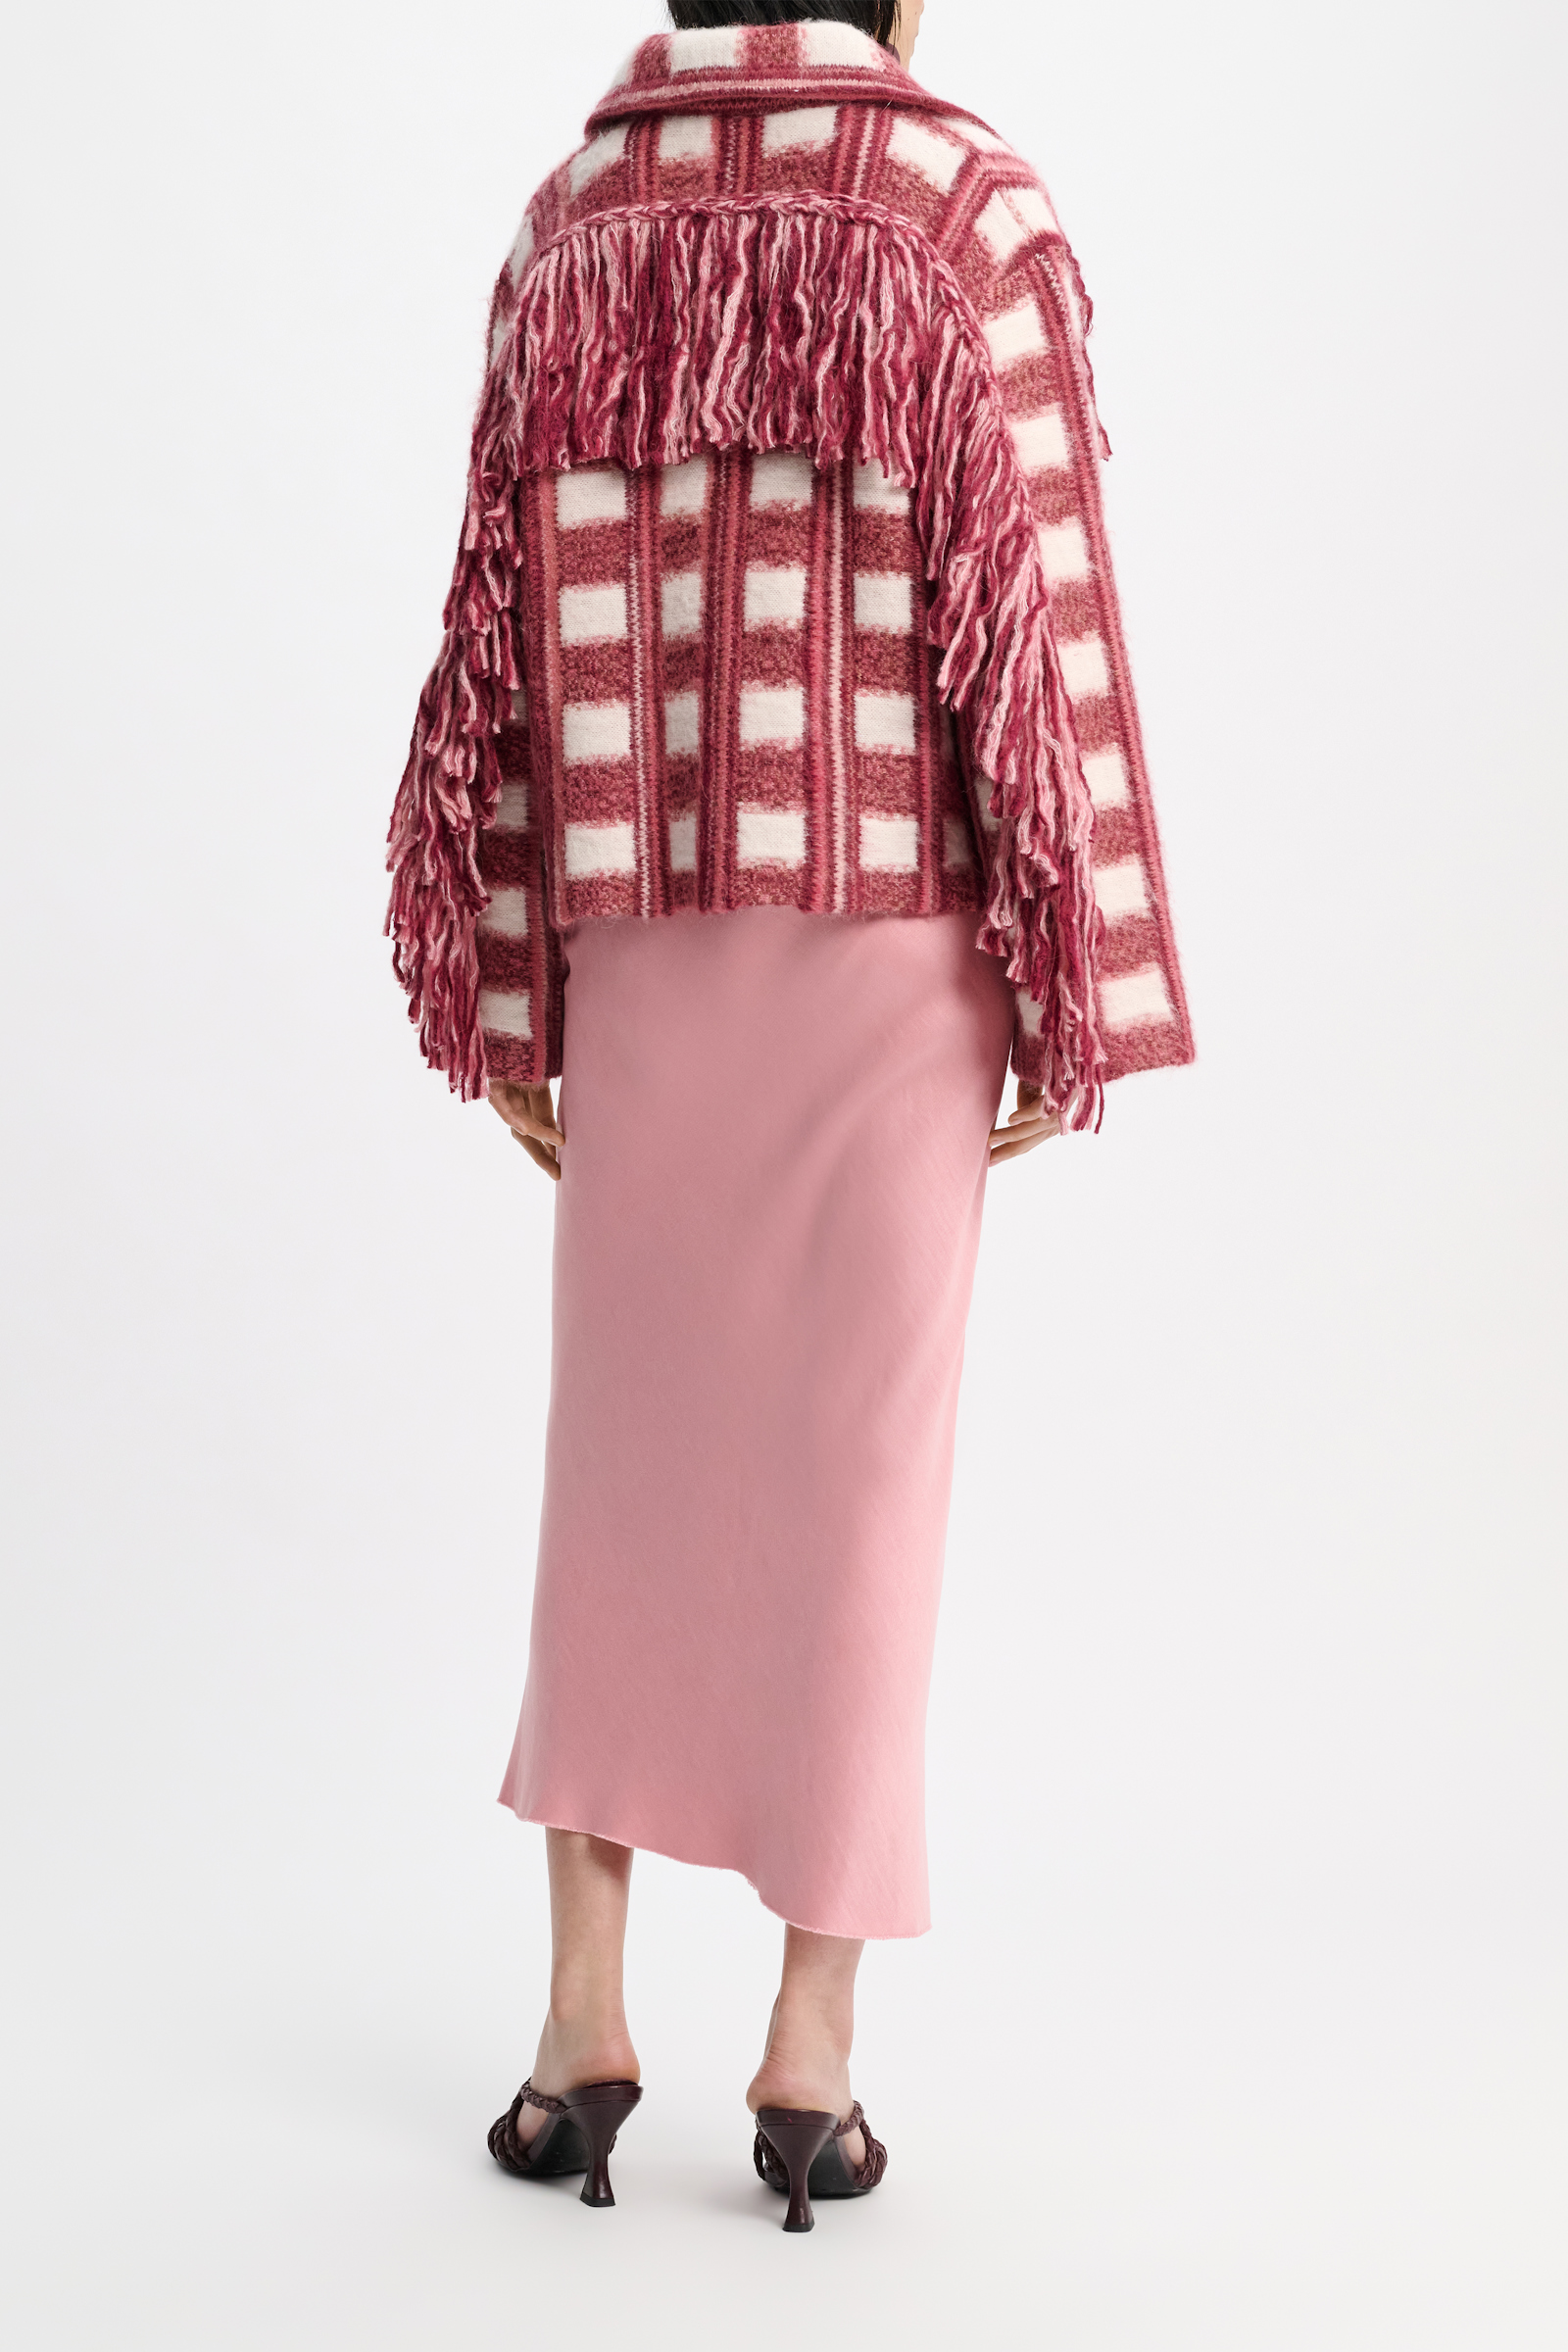 Dorothee Schumacher Plaid knit jacquard jacket with XL fringe pink check mix